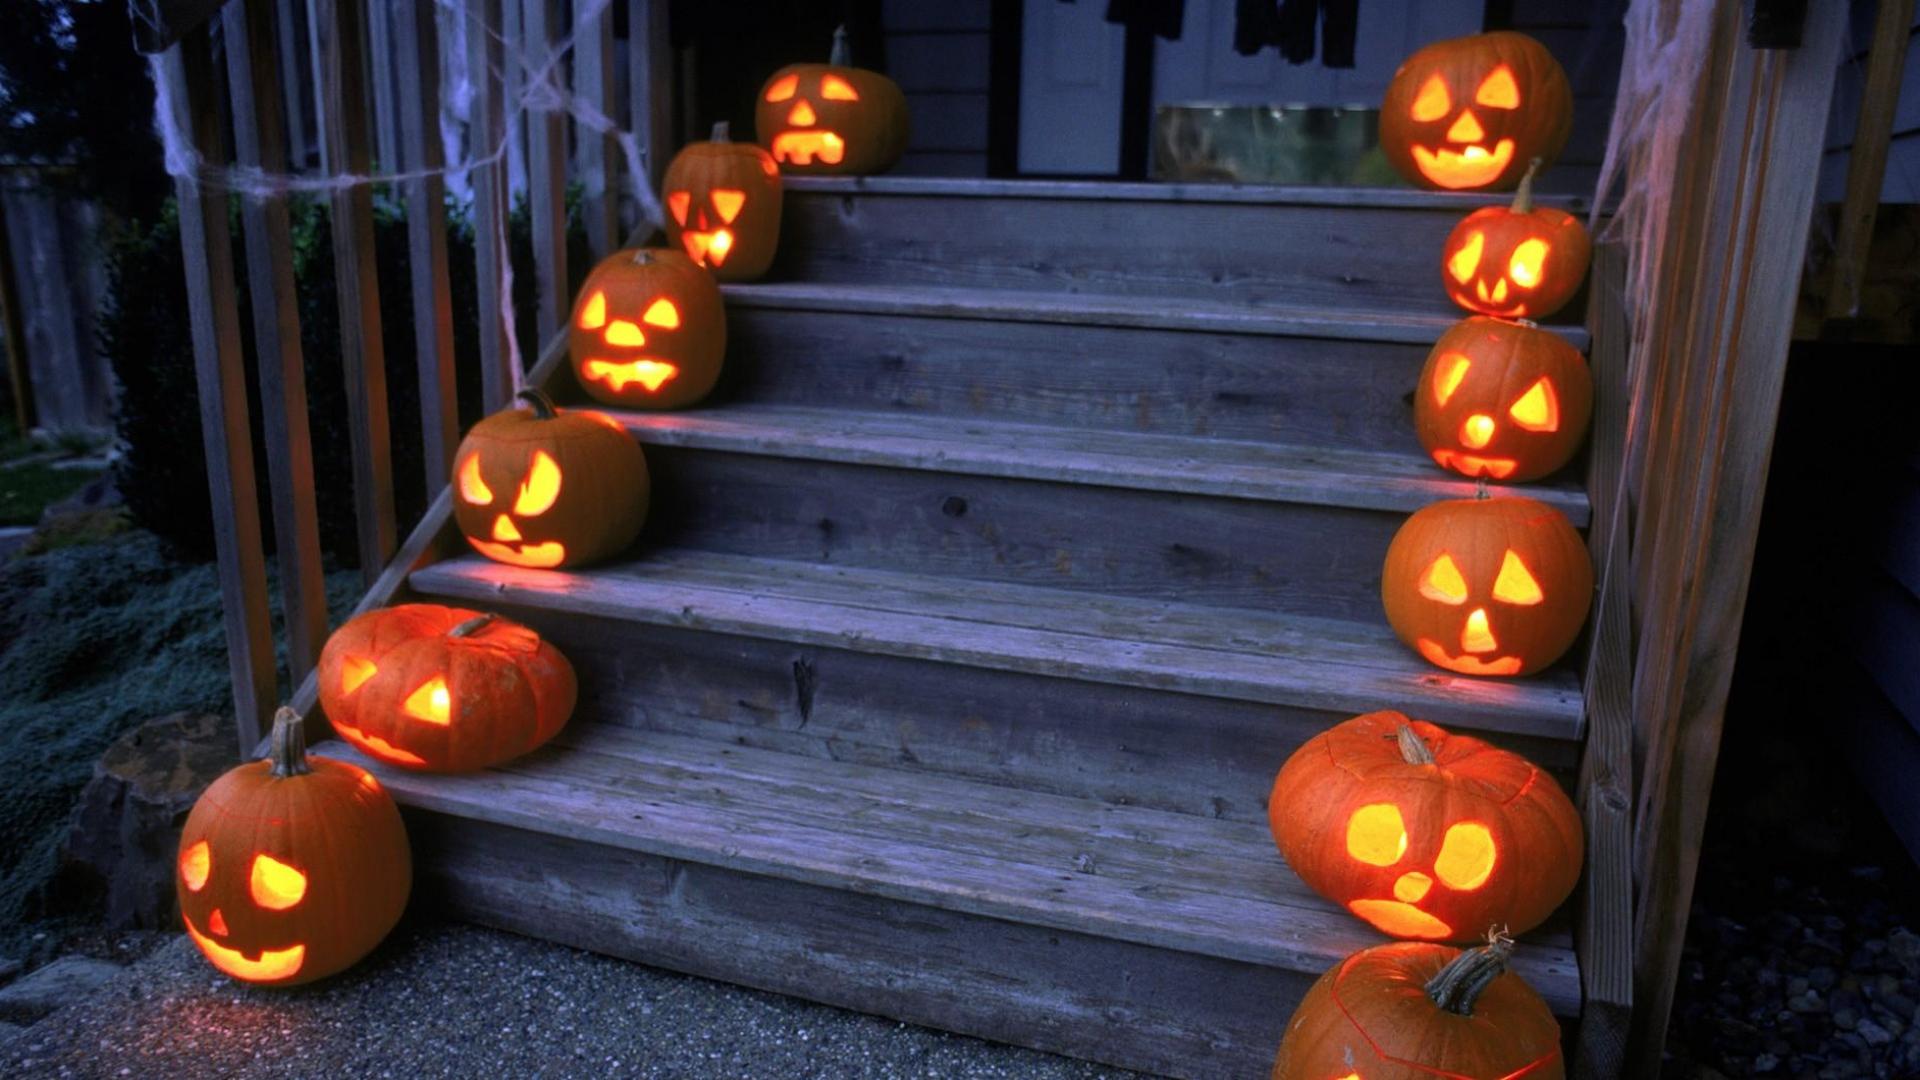 Download 1920x1080 HD Wallpaper Halloween Stair Jack O' Lantern